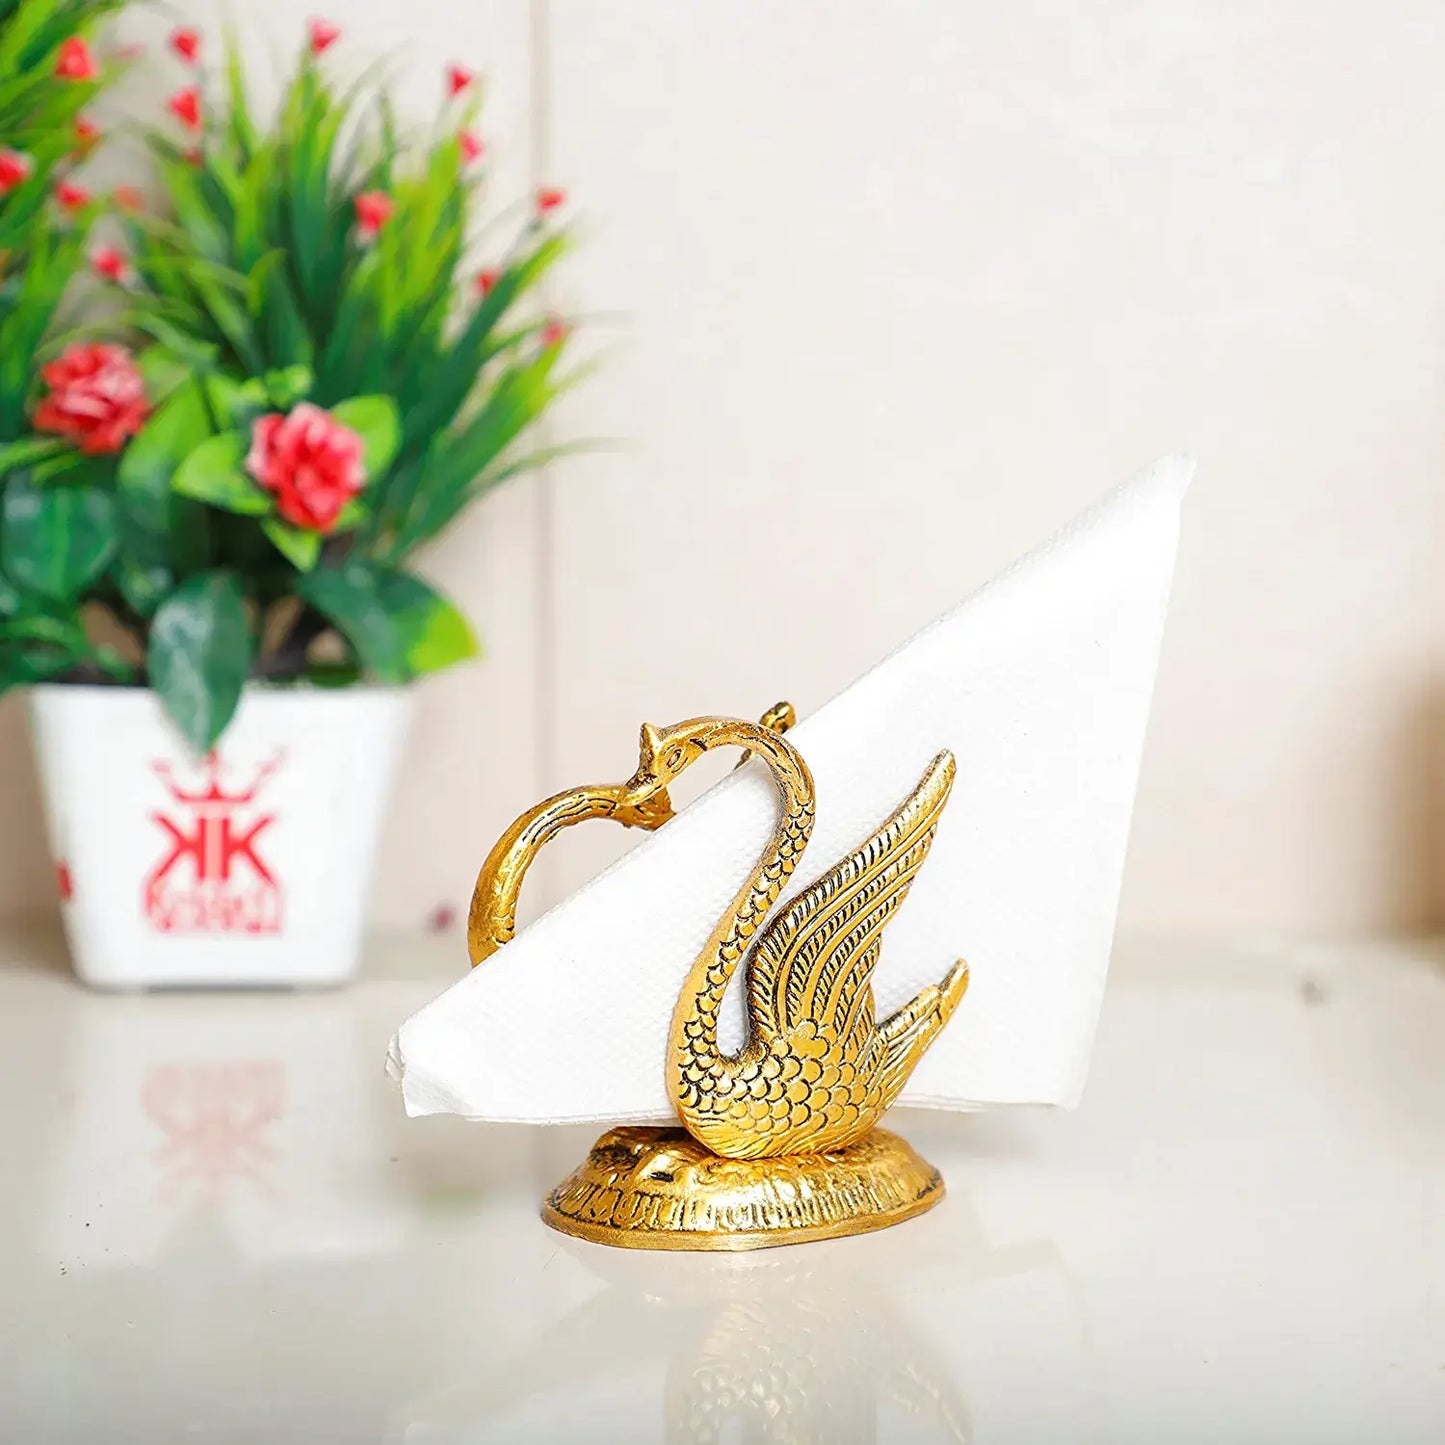 Oxidize Metal Handicrafts Decorative Golden Swan Duck Shape Napkin Holder Dining Tableware Handmade Handicrafts showpiece Gifts